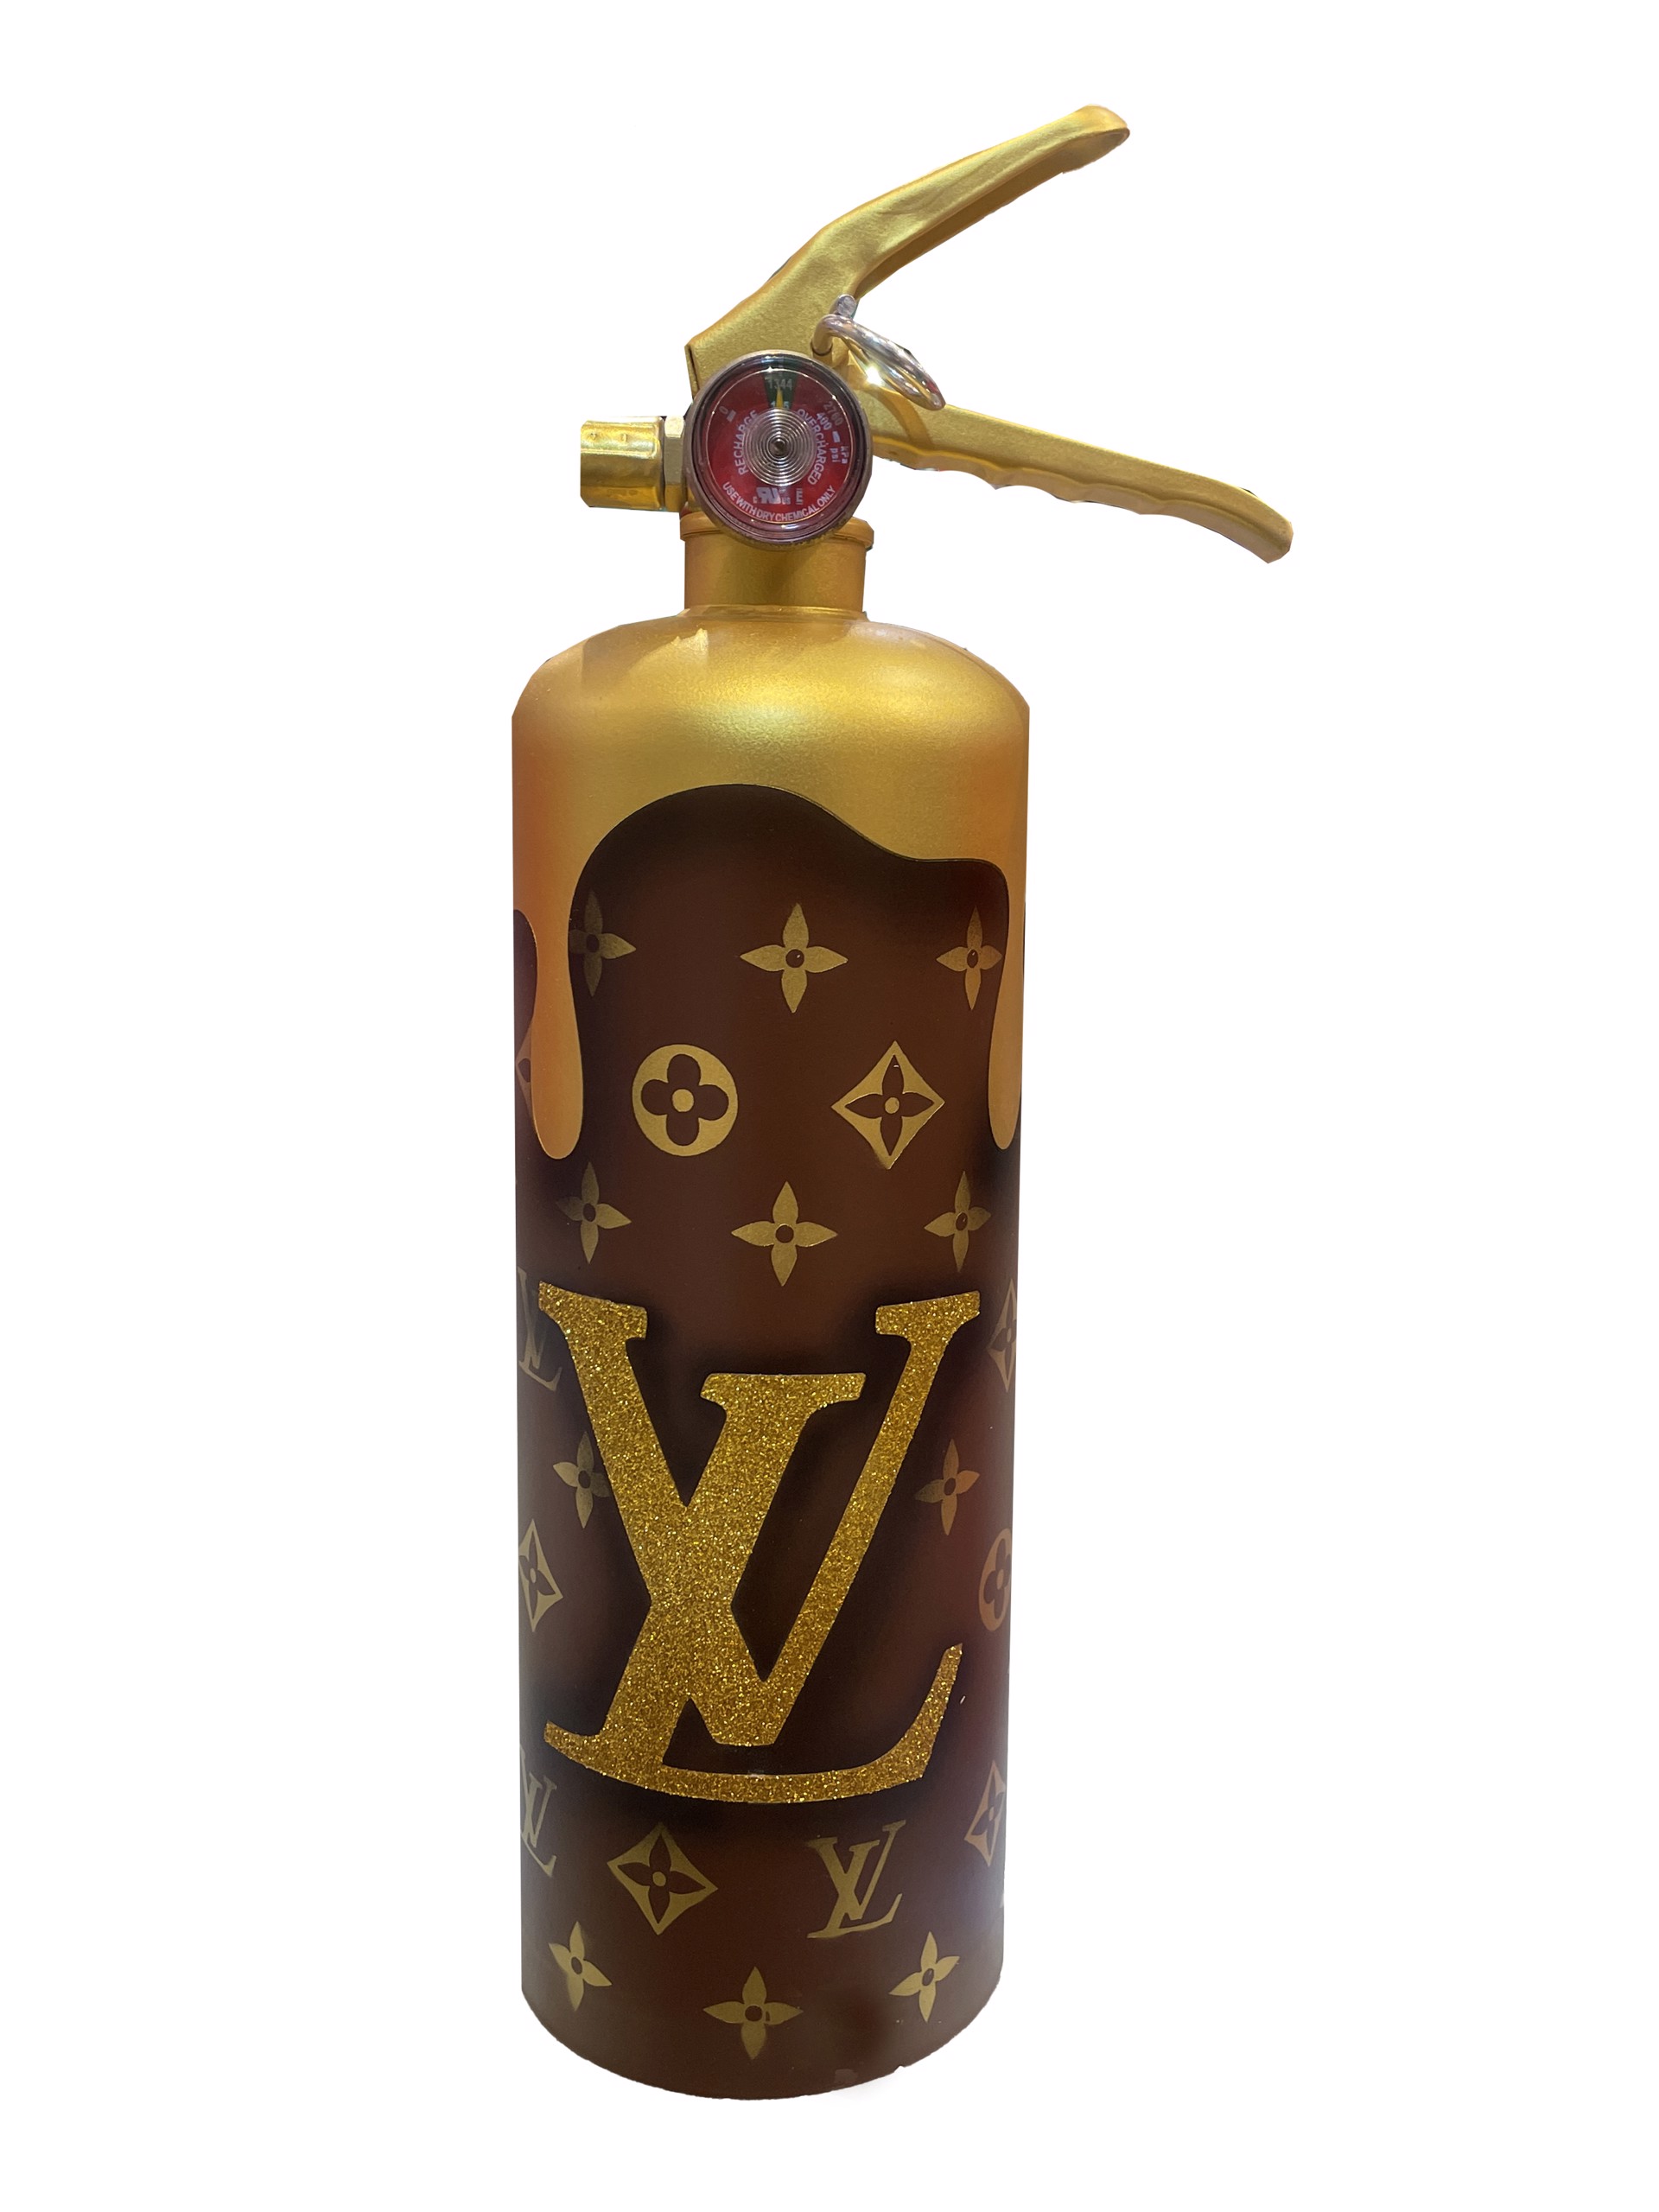 LV Fire Extinguisher by David Mir